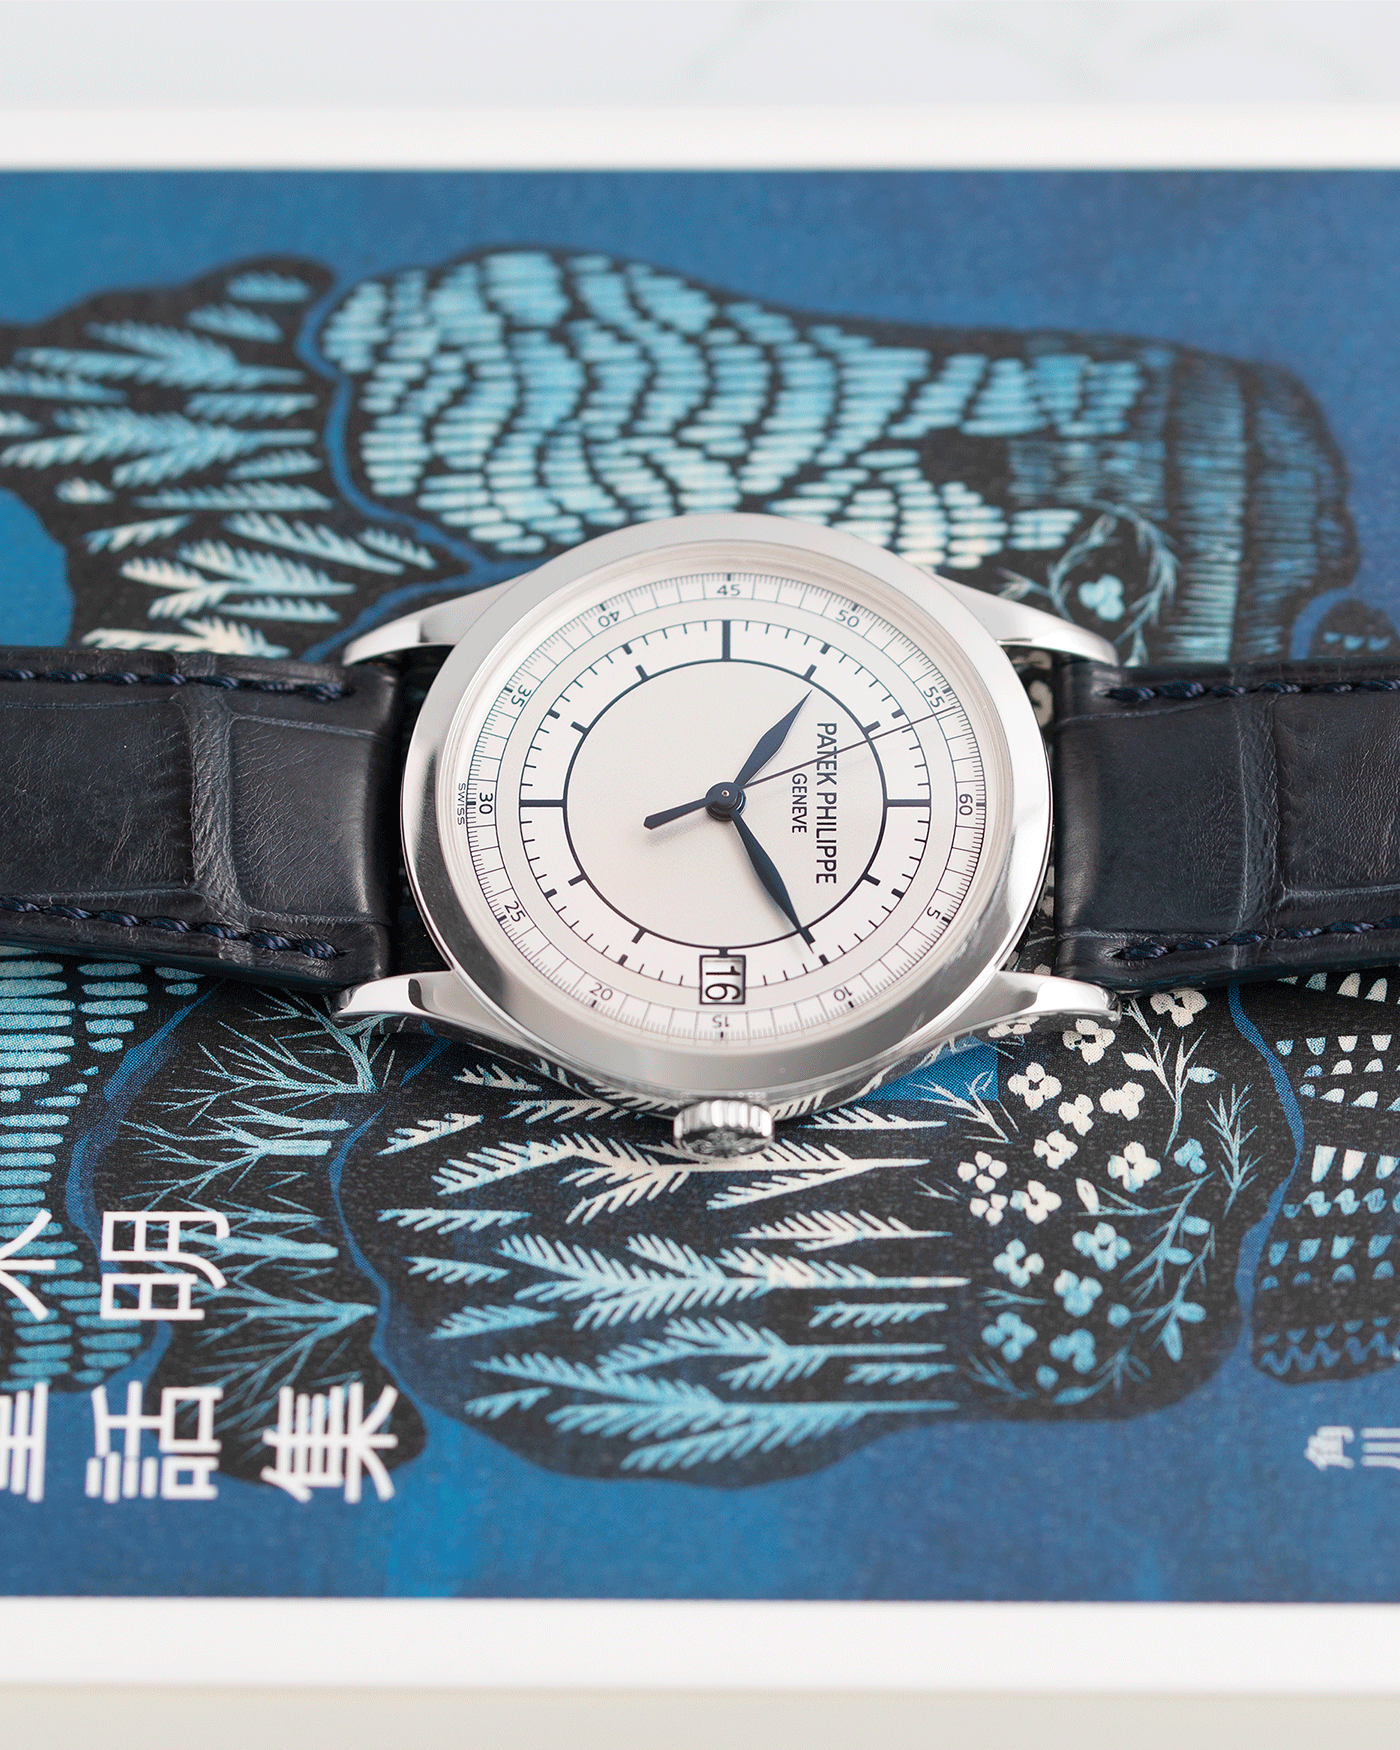 Patek Philippe Calatrava 5296G White Gold Watch | S.Song Timepieces 